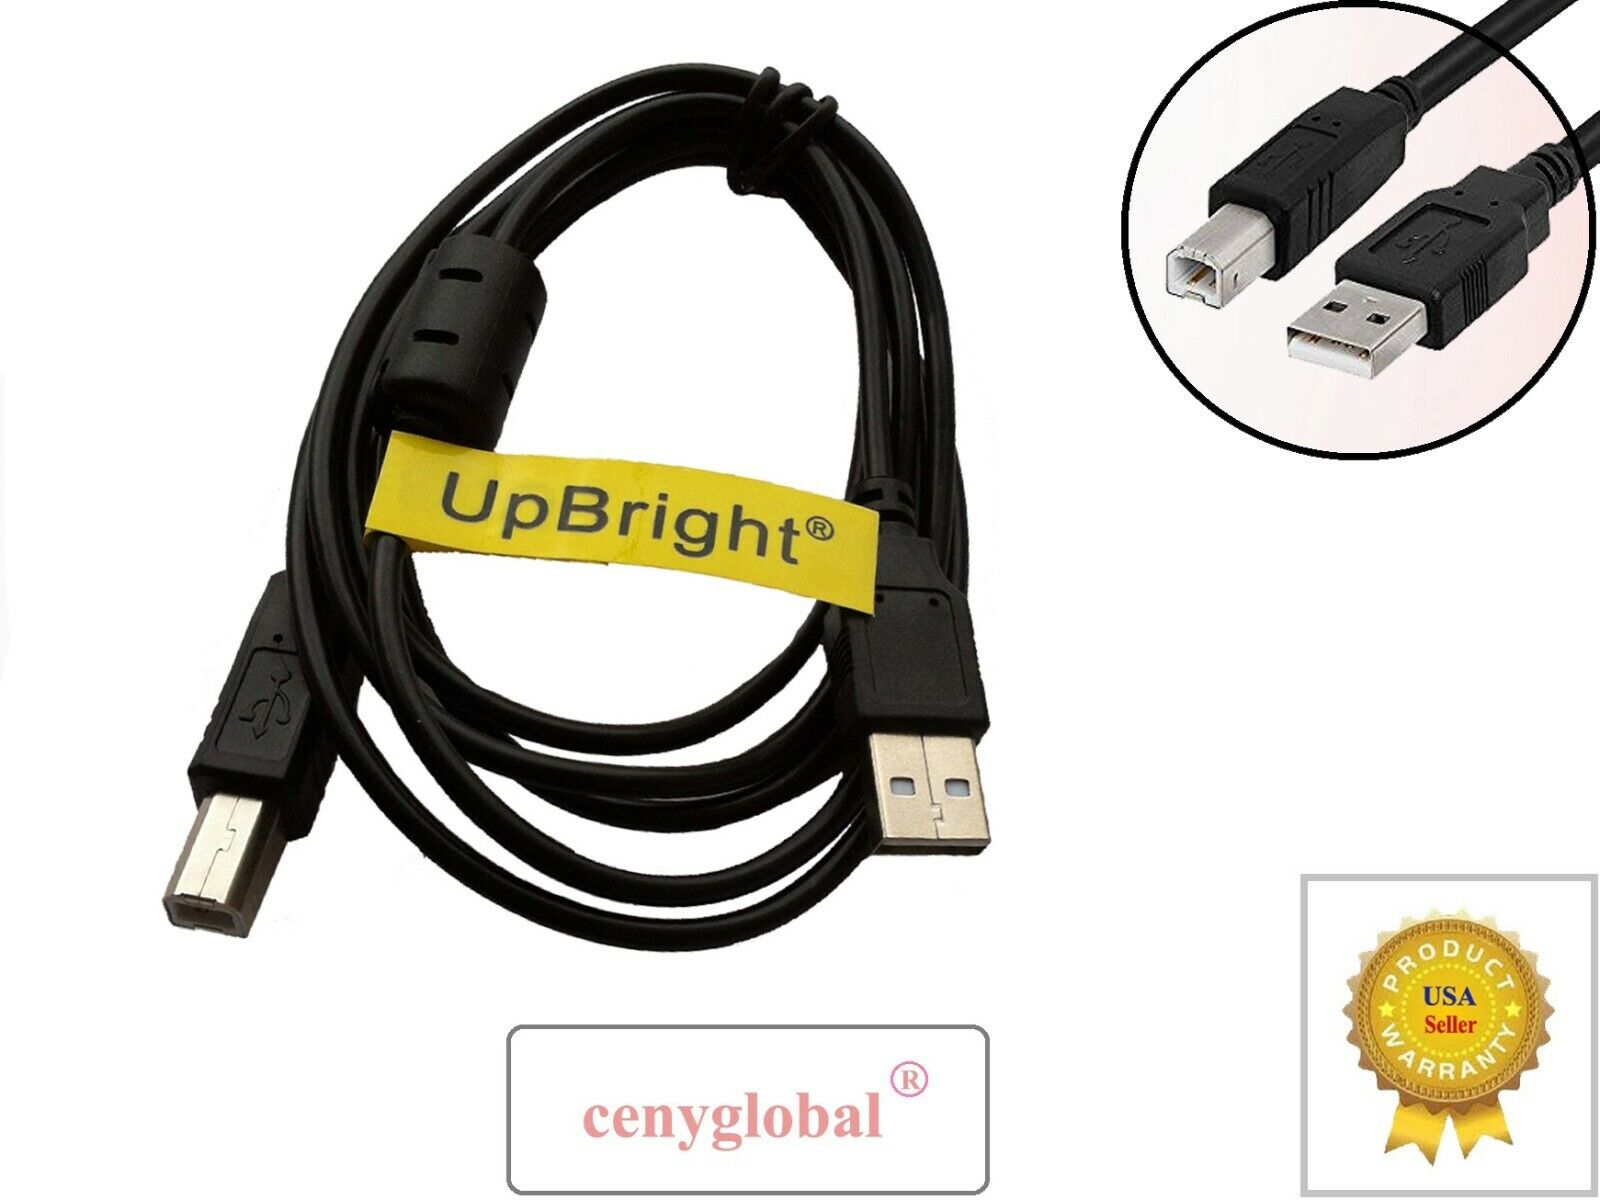 USB Cable PC Data Cord For Cricut Explore One, Air Series Cutting Machine Create